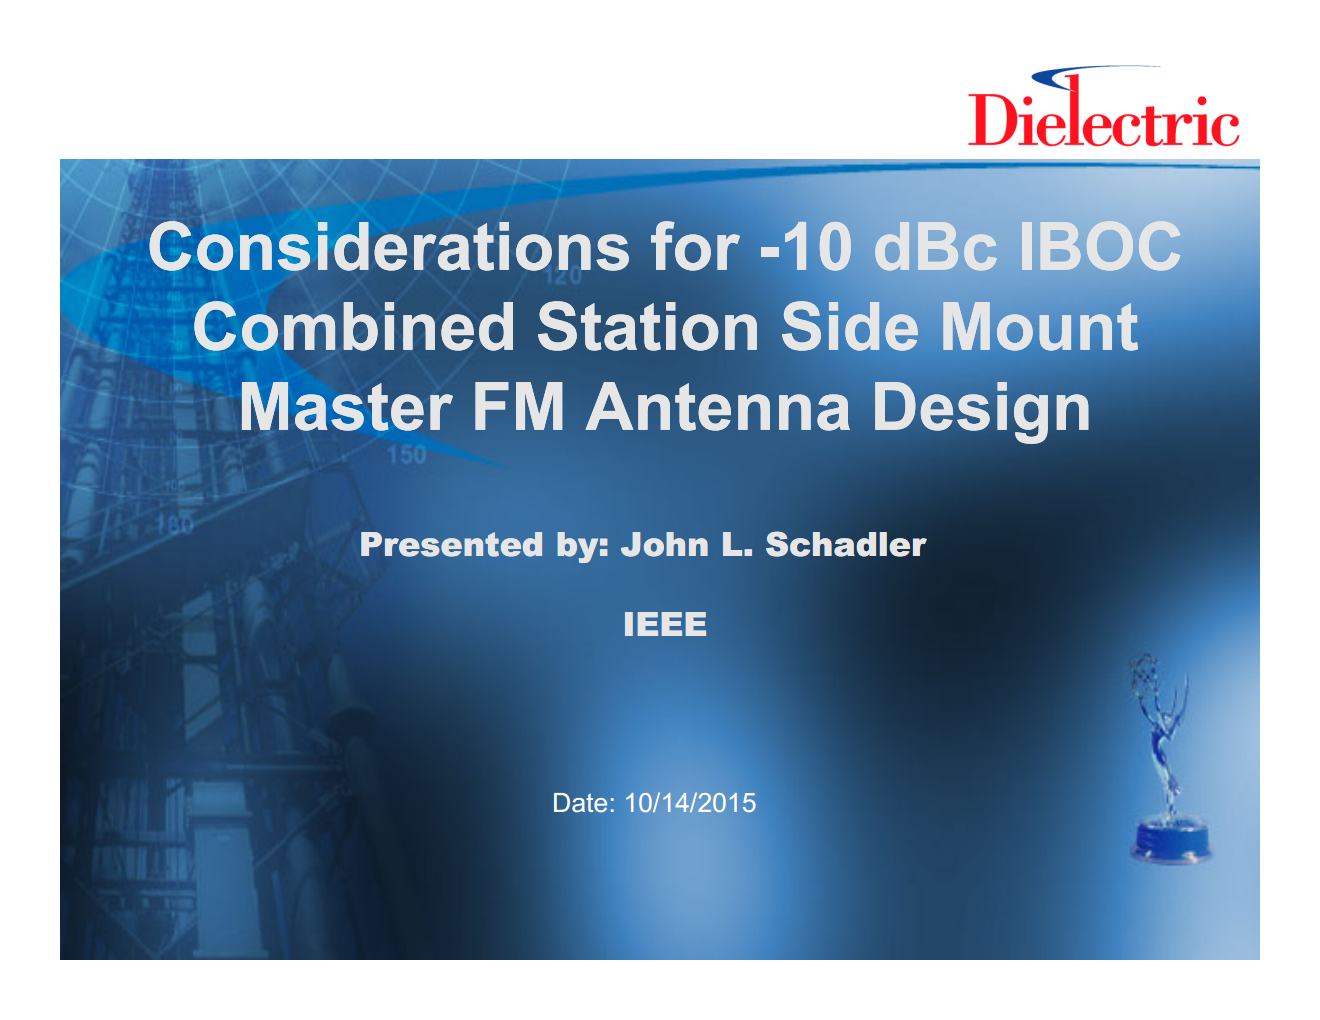 -10dBc IBOC Combined Station Antenna Design